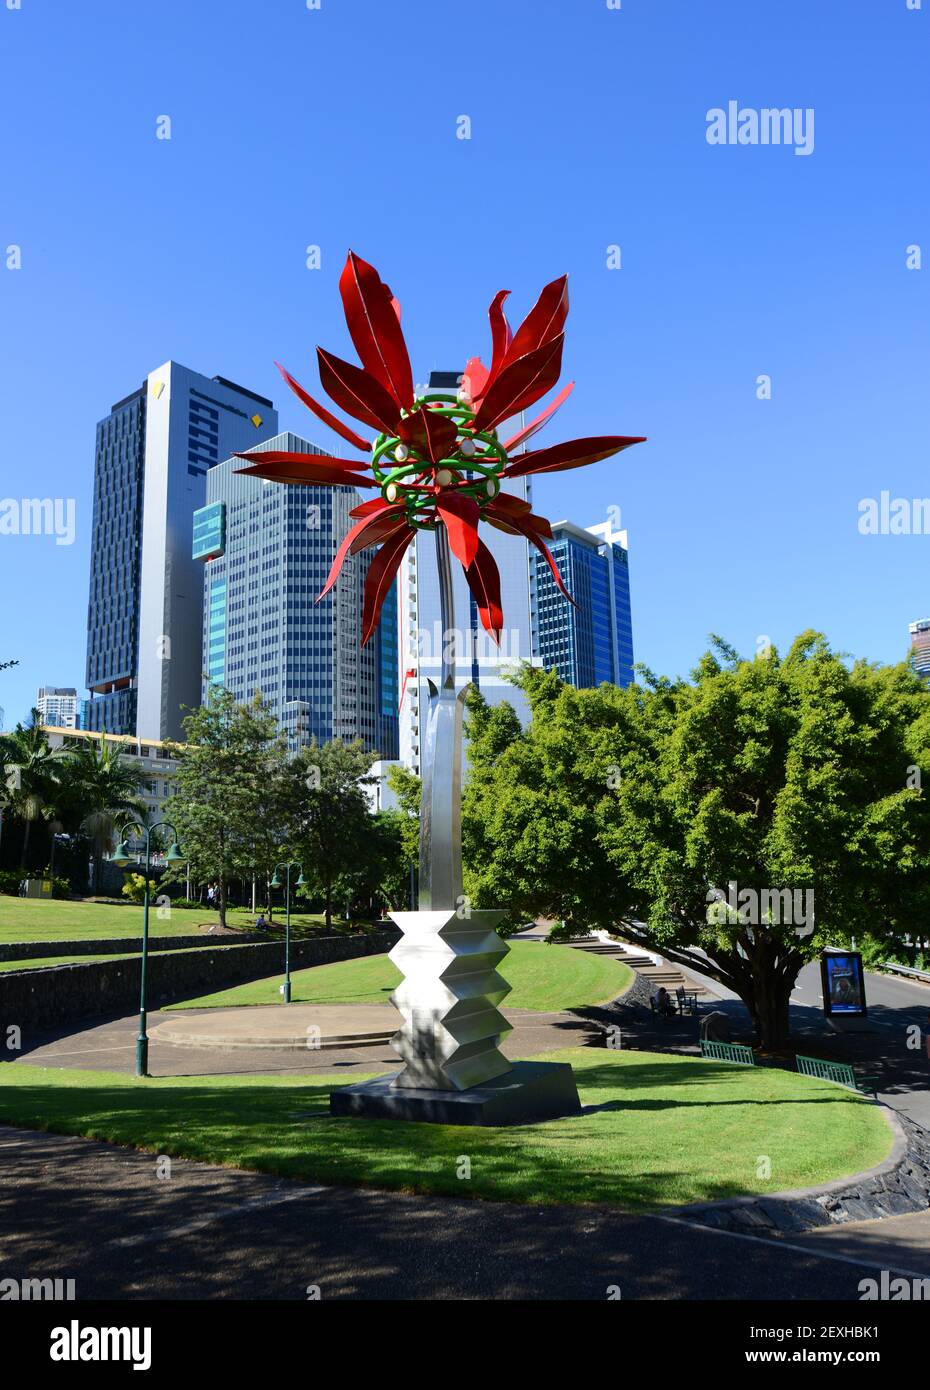 The Poinsettia Riverfire in the Emma Miller Place park in Brisbane, Australia. Stock Photo